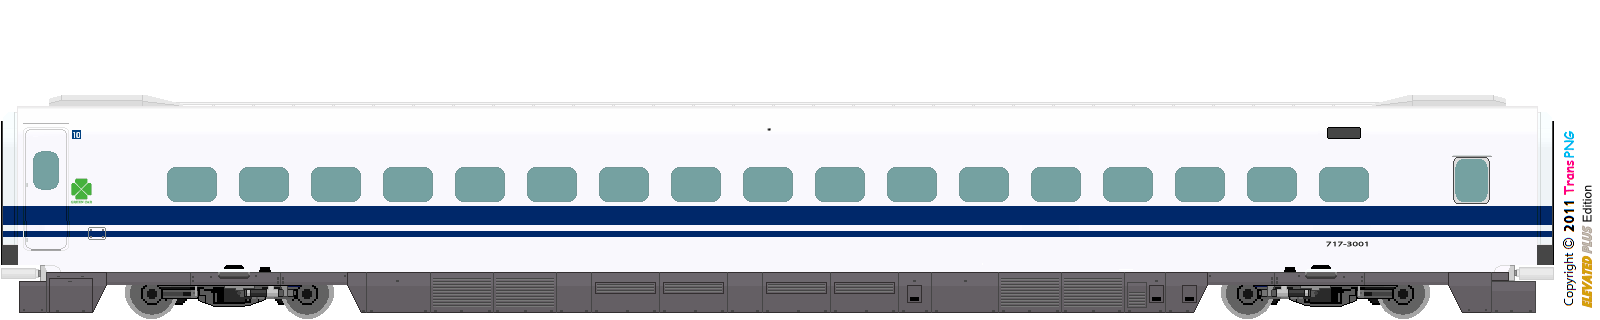 [9012] West Japan Railway 52286607017_7b00d4954a_o